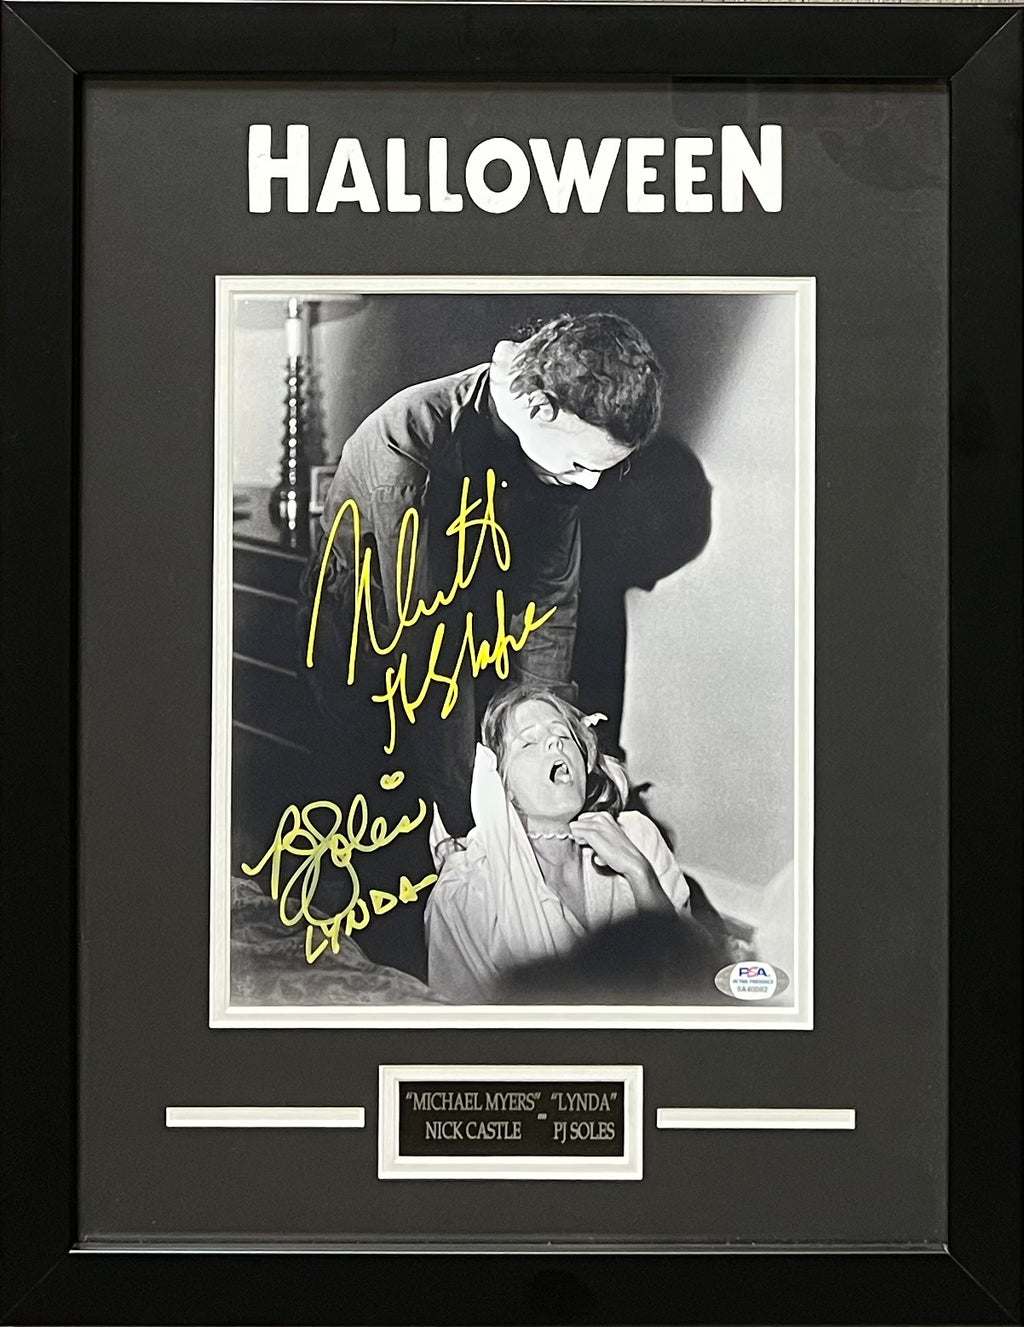 Nick Castle PJ Soles autographed inscribed framed 8x10 photo Halloween PSA COA